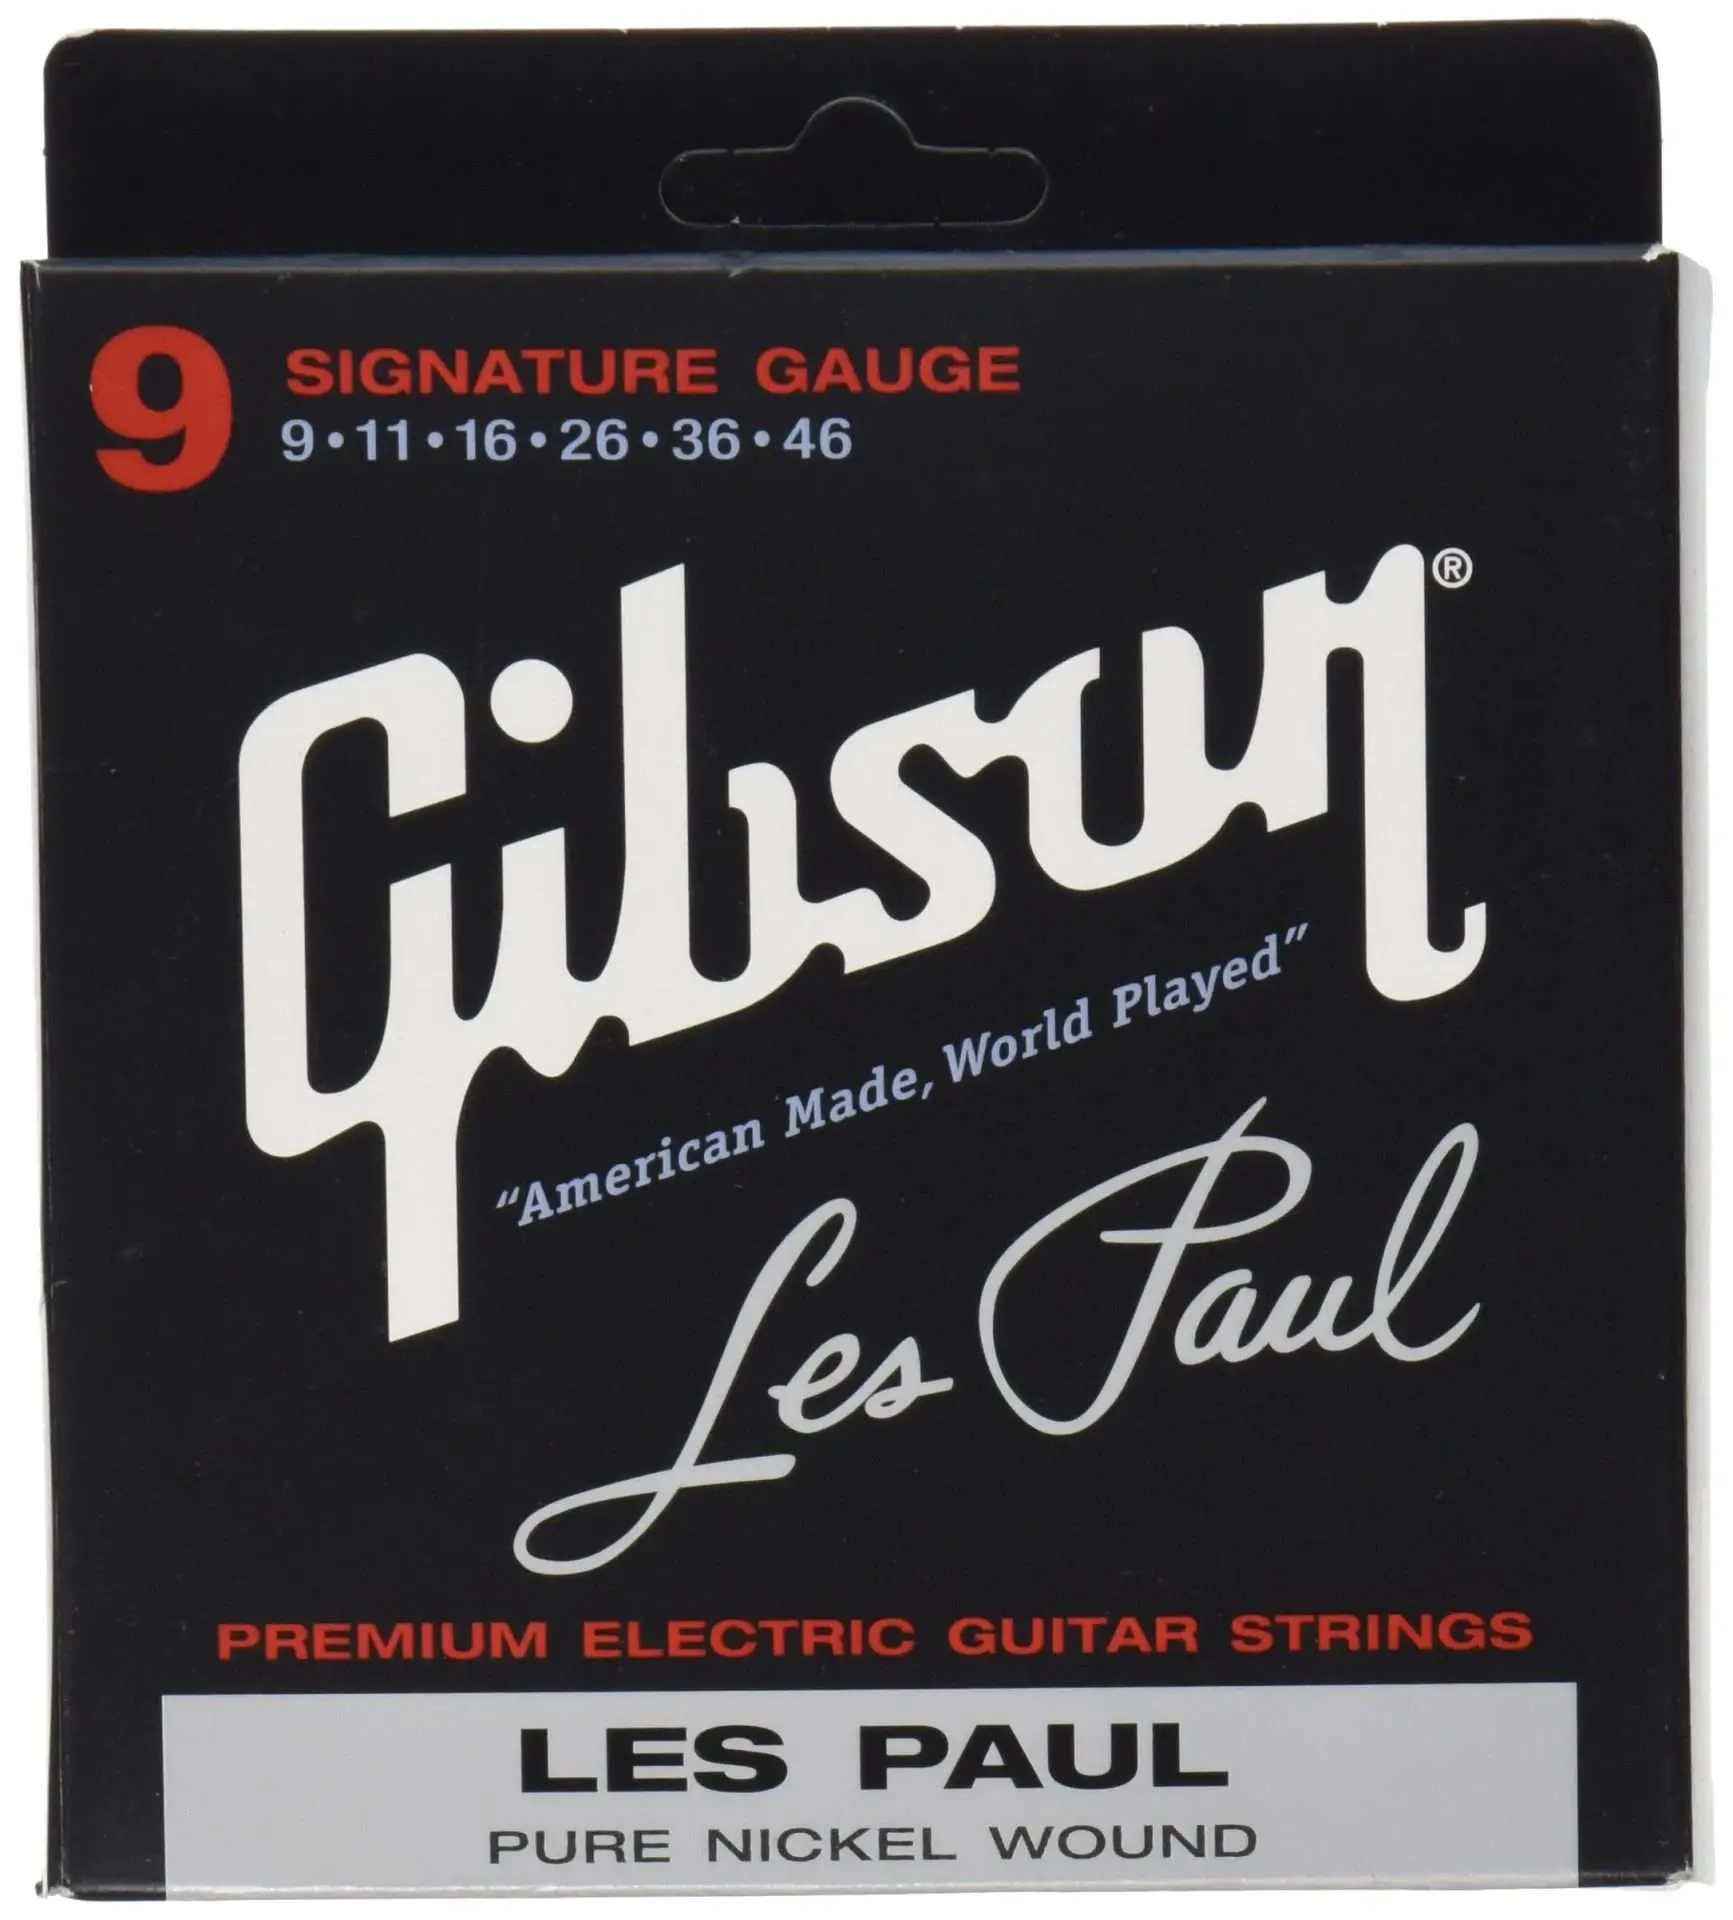 Gibson LP Signature Gauge Strings 9s